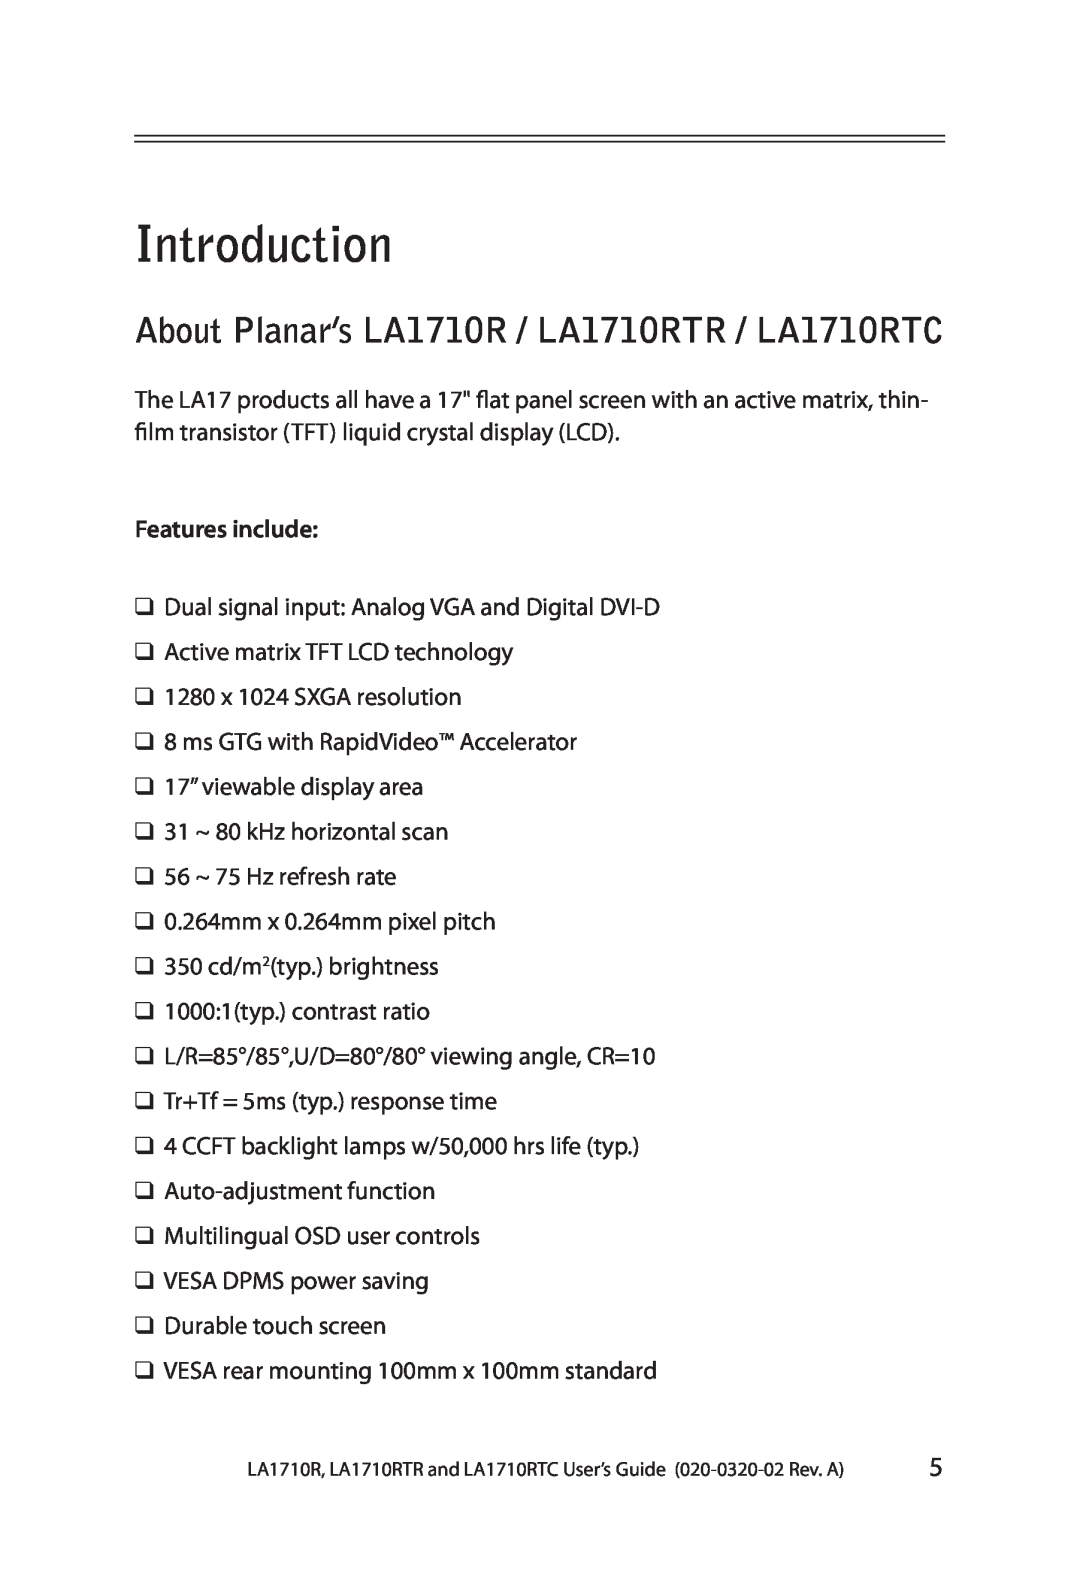 Planar manual Introduction, About Planar’s LA1710R / LA1710RTR / LA1710RTC, Features include 